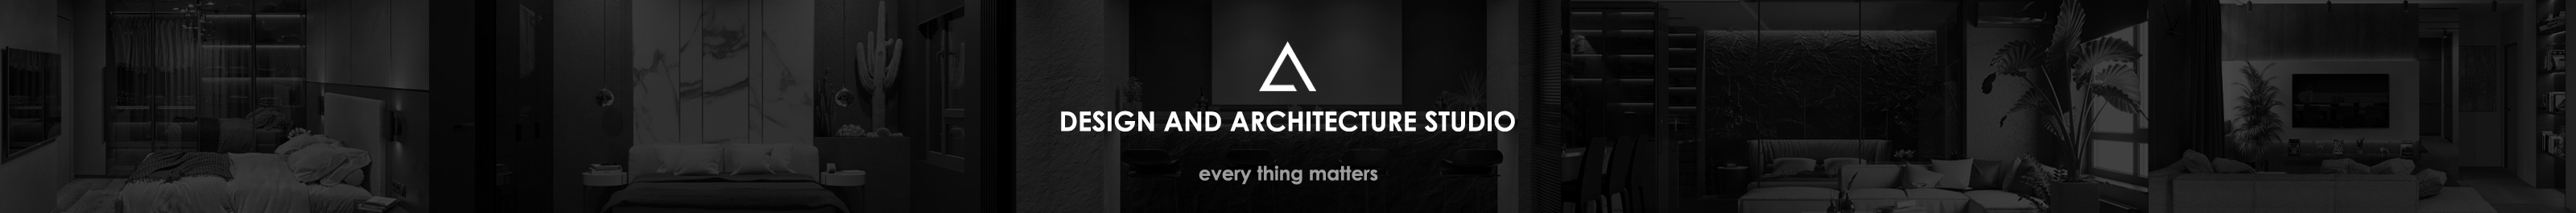 AG Architecture profil başlığı